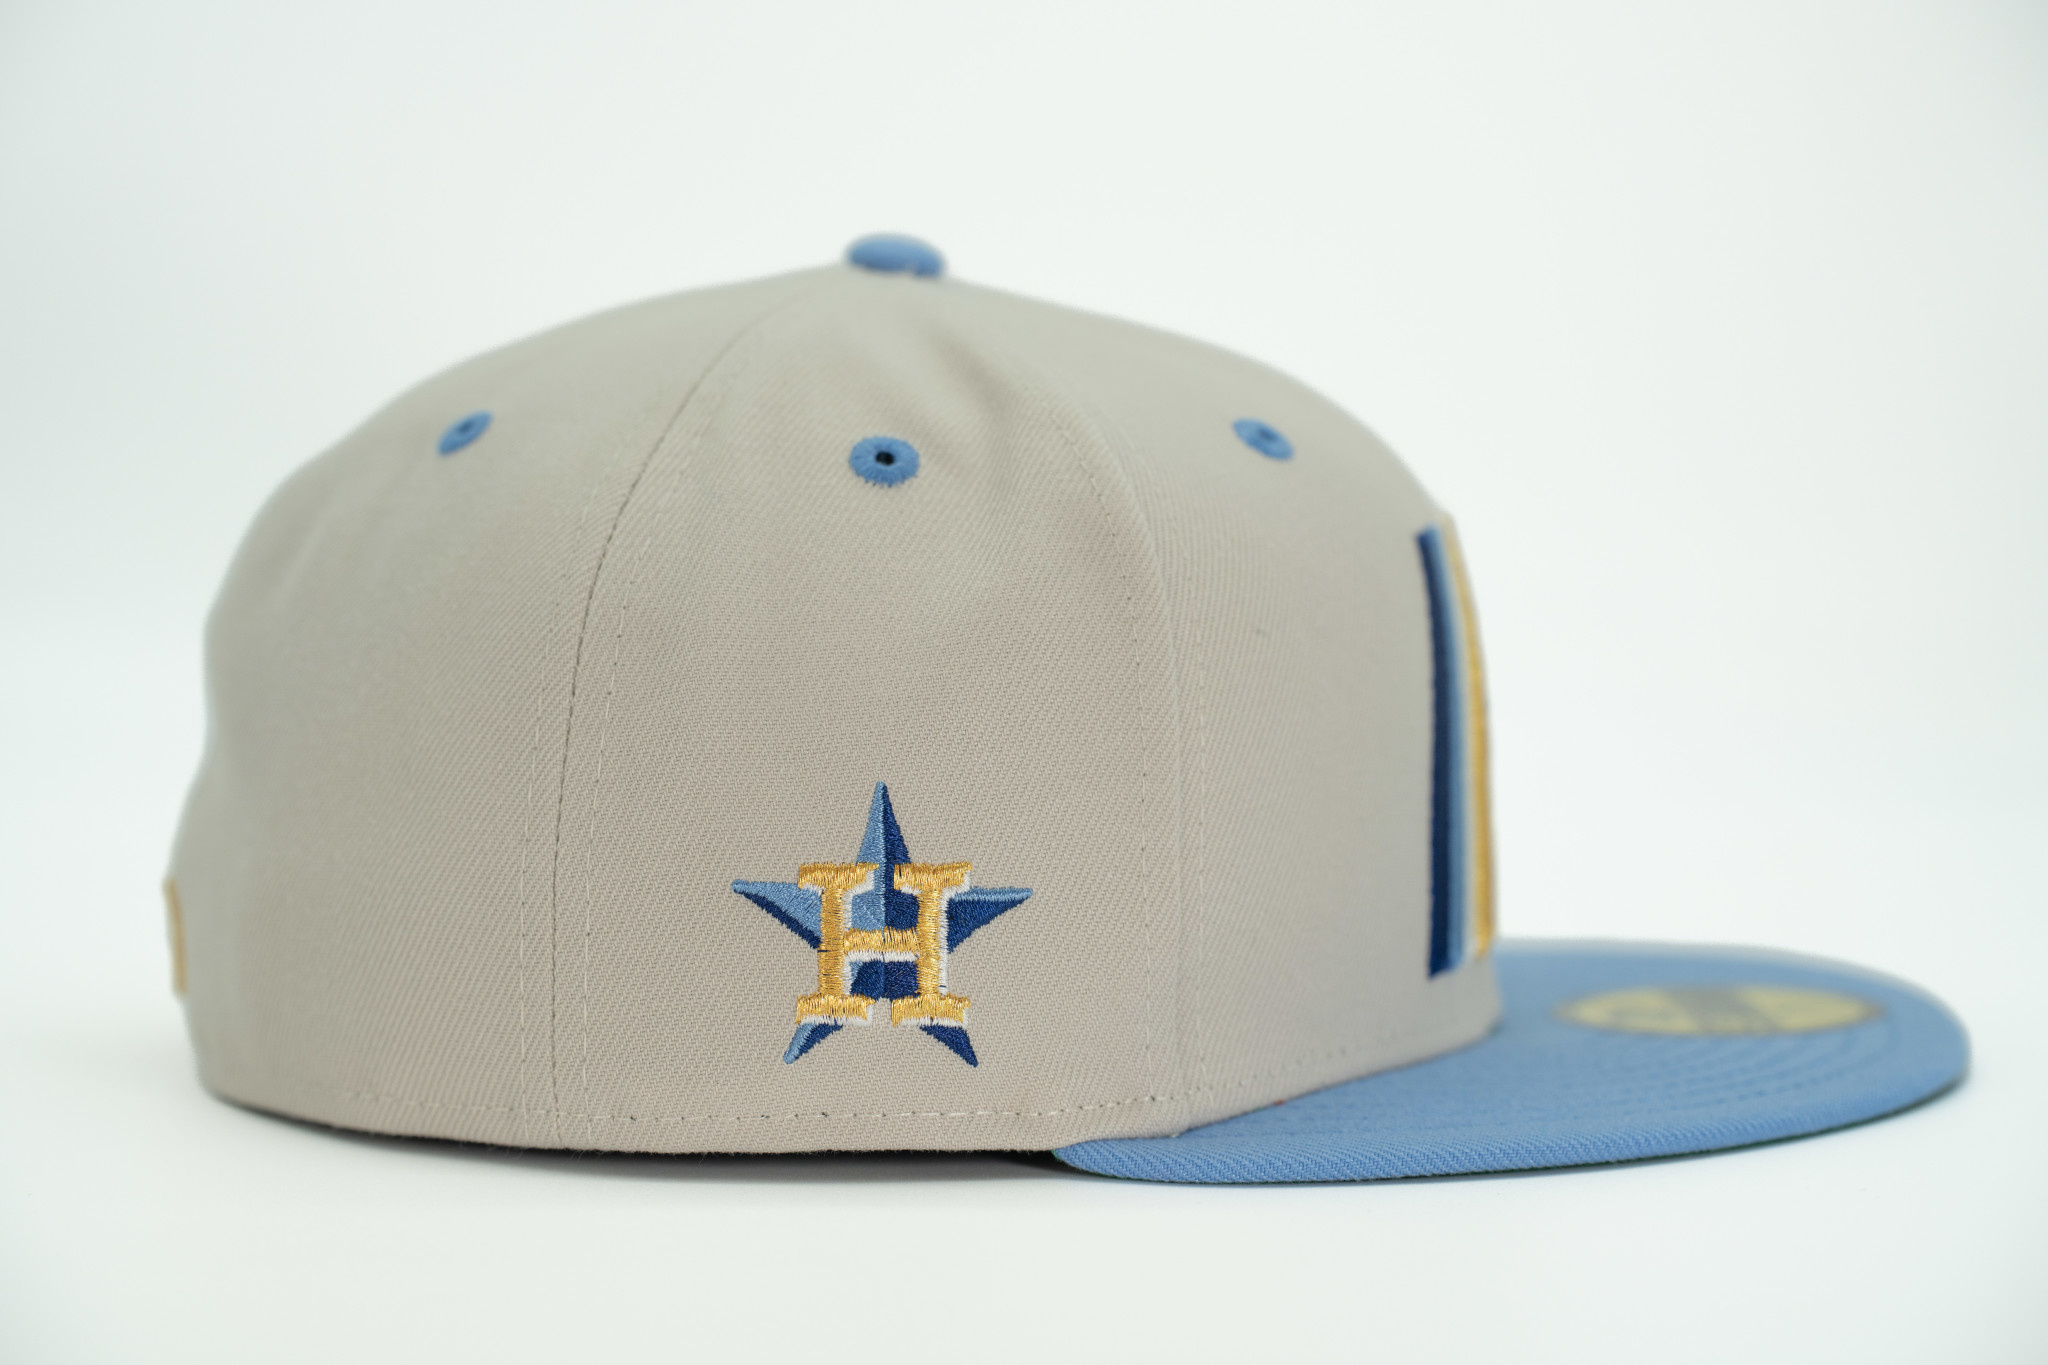 royal blue houston astros hat